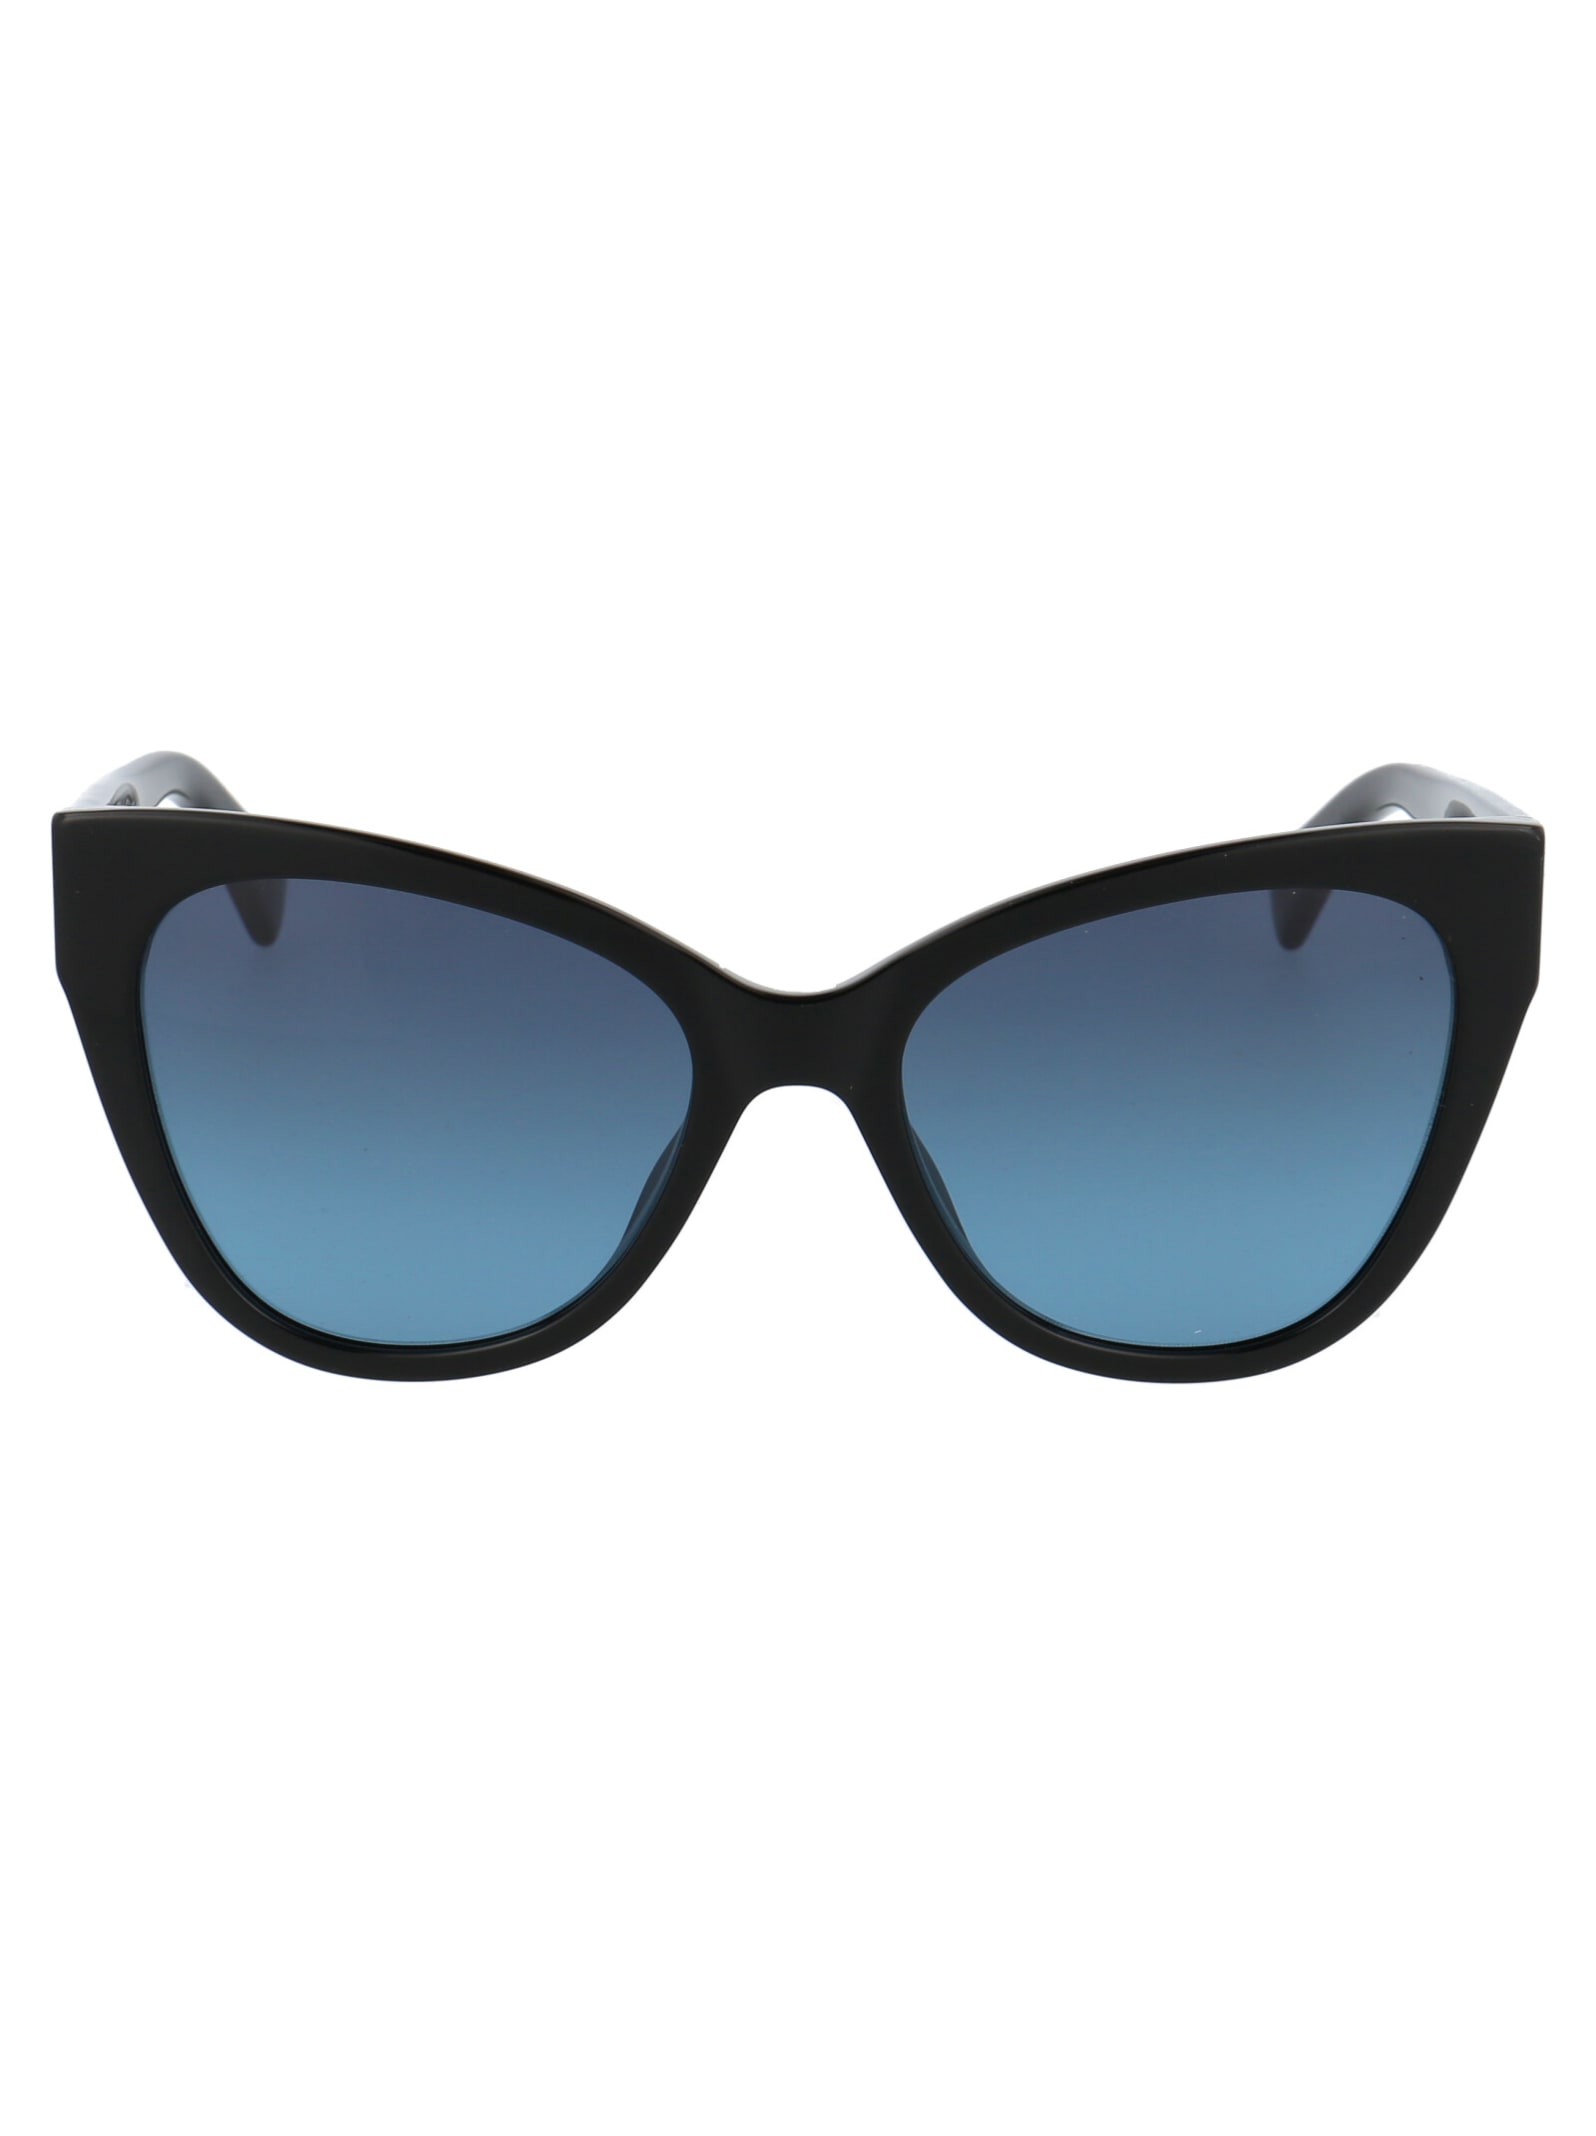 Moschino Mos056/s Sunglasses